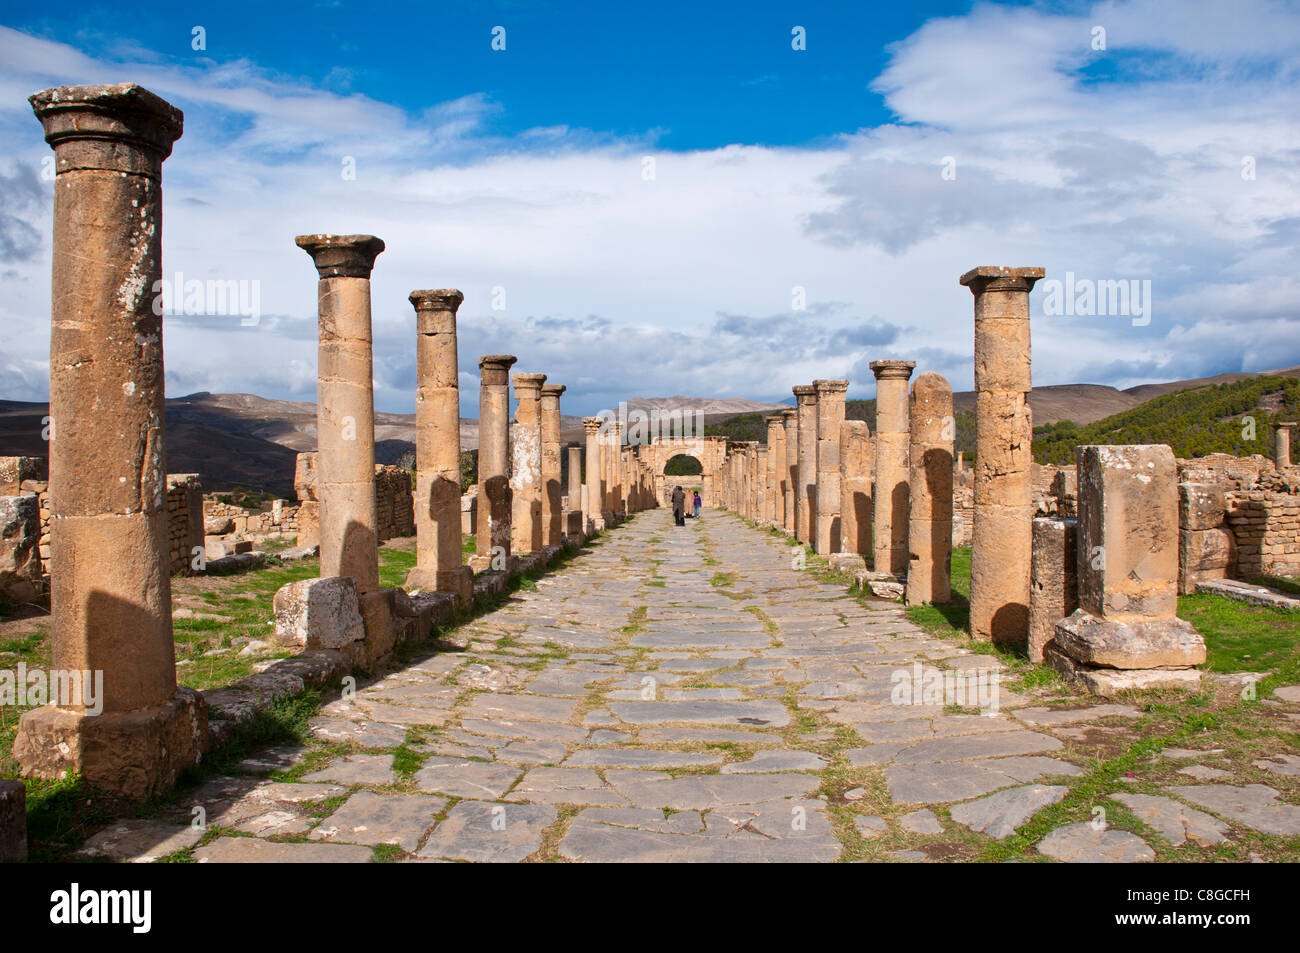 The Roman ruins of Djemila, UNESCO World Heritage Site, Algeria, North Africa Stock Photo